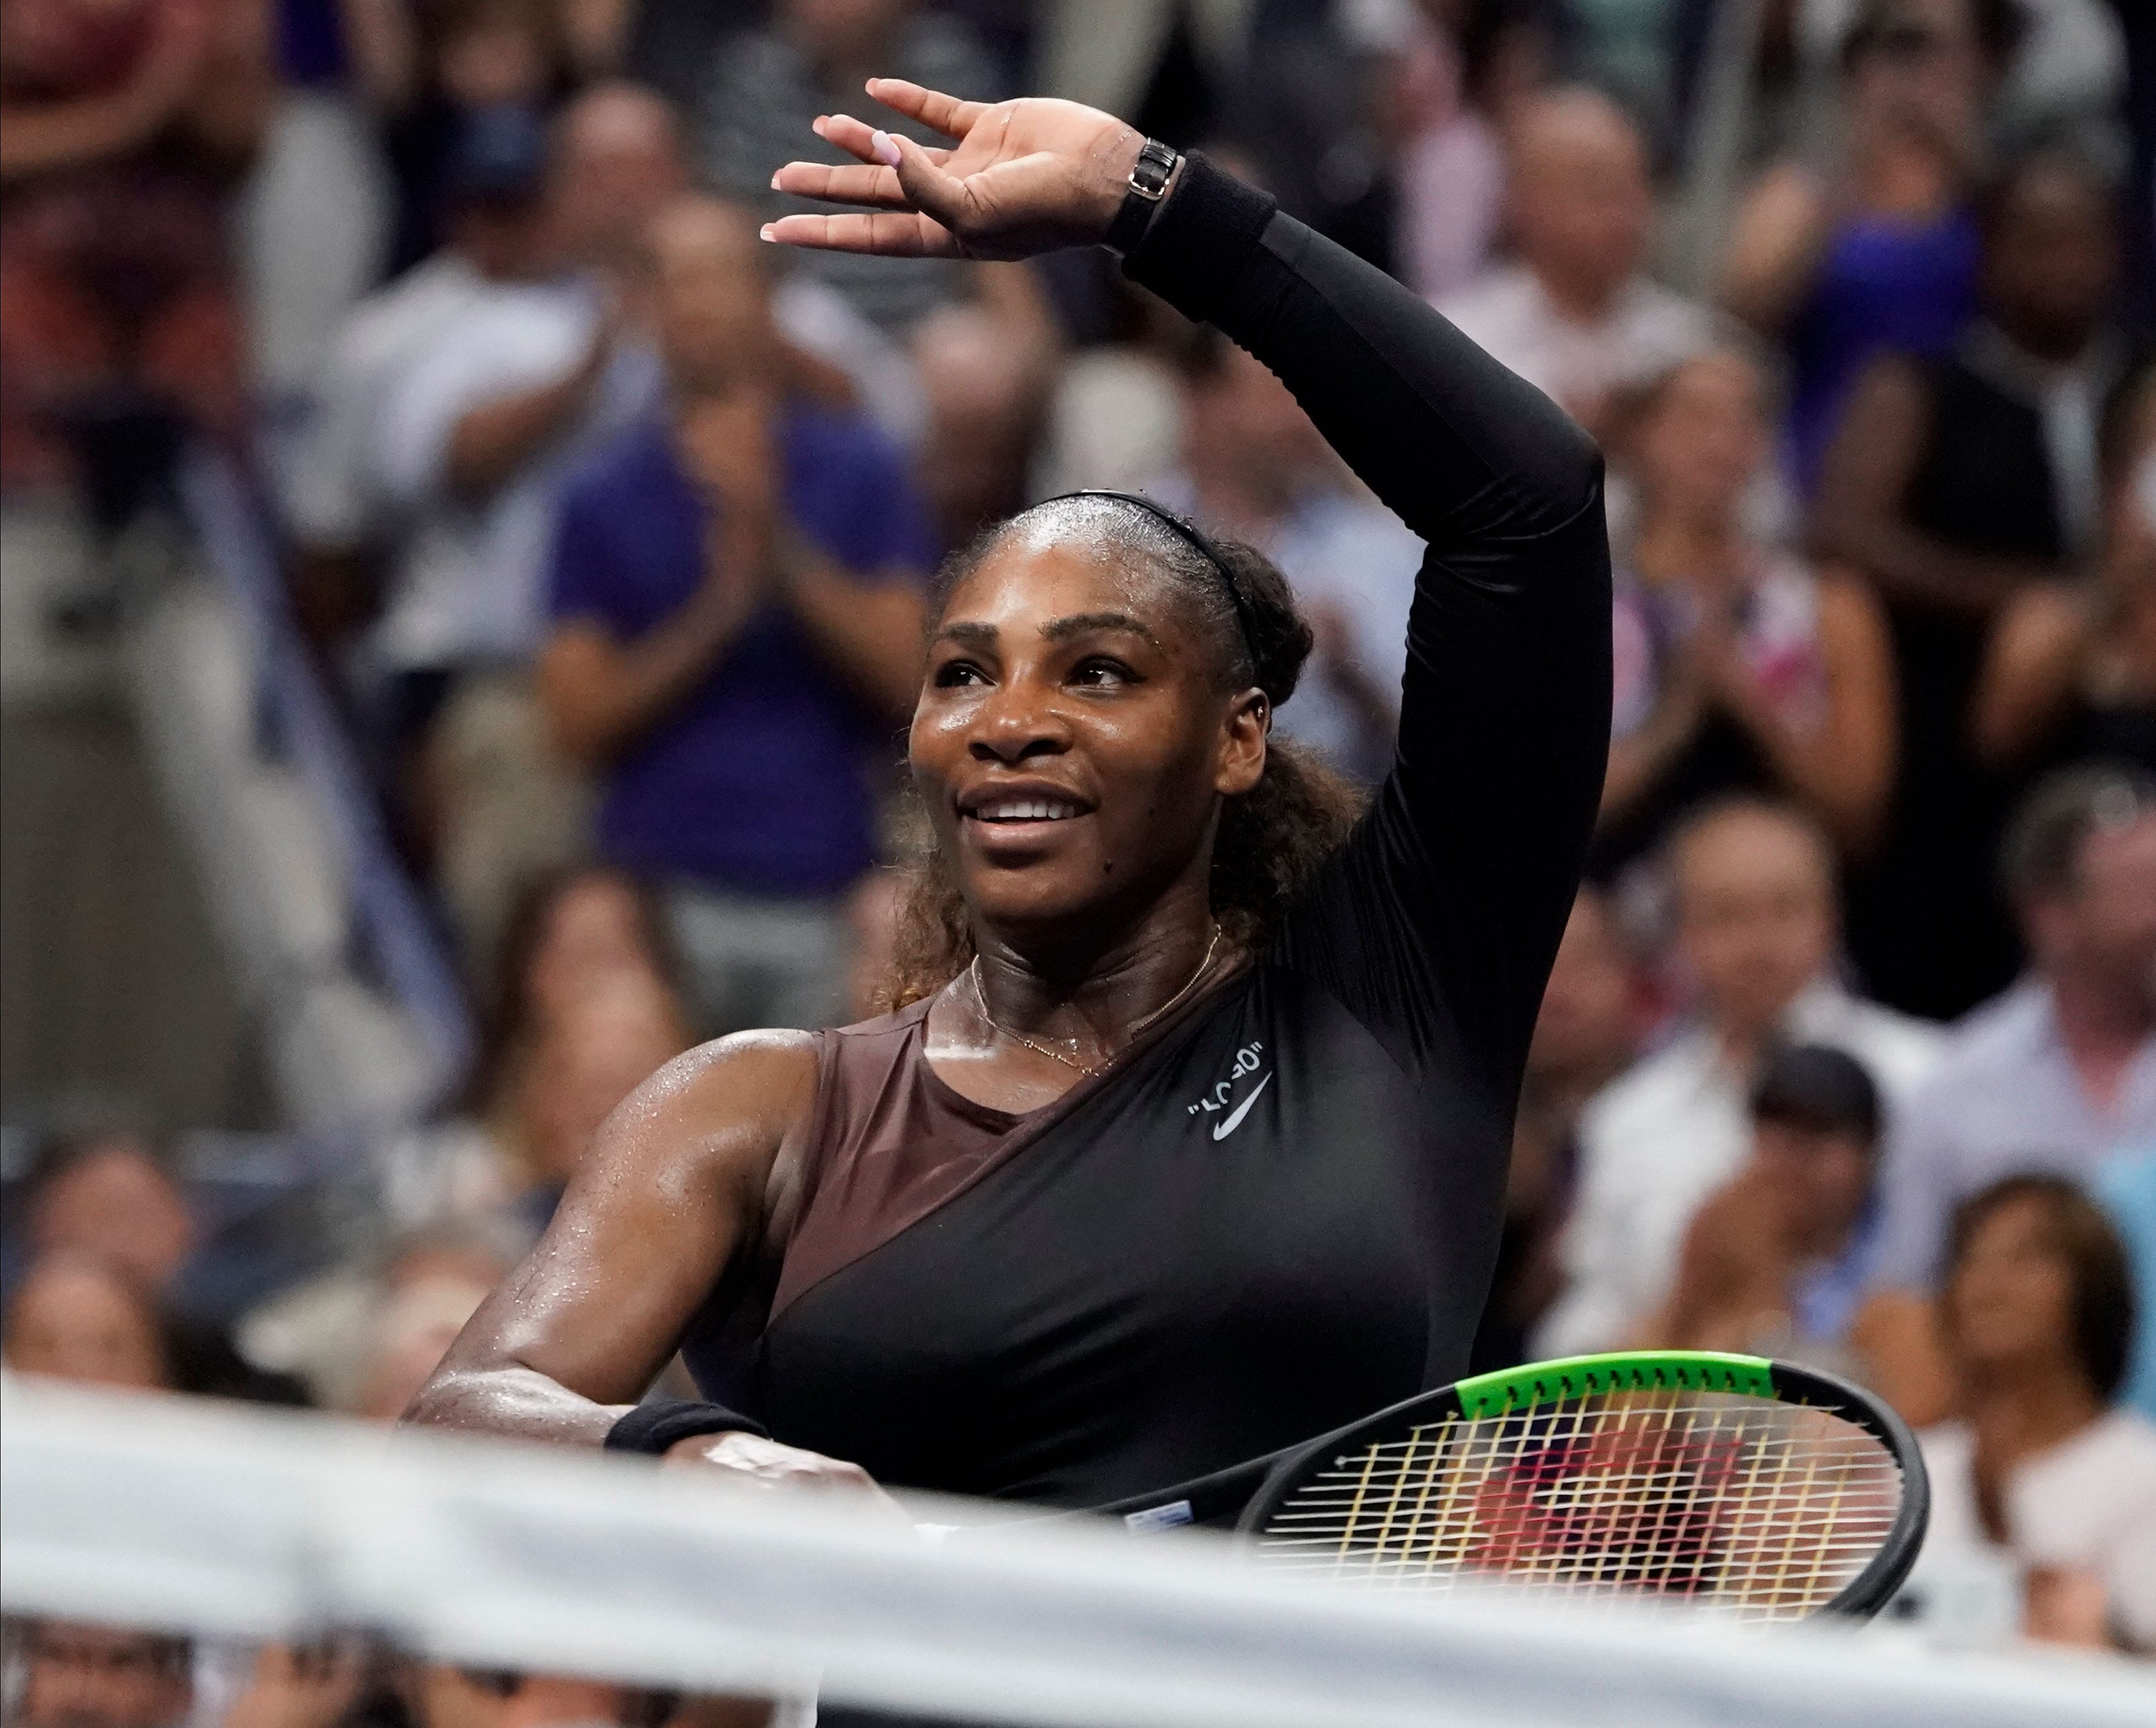 Paquete o empaquetar pobreza entre Nike's Colin Kaepernick ad: Serena Williams is in their corner